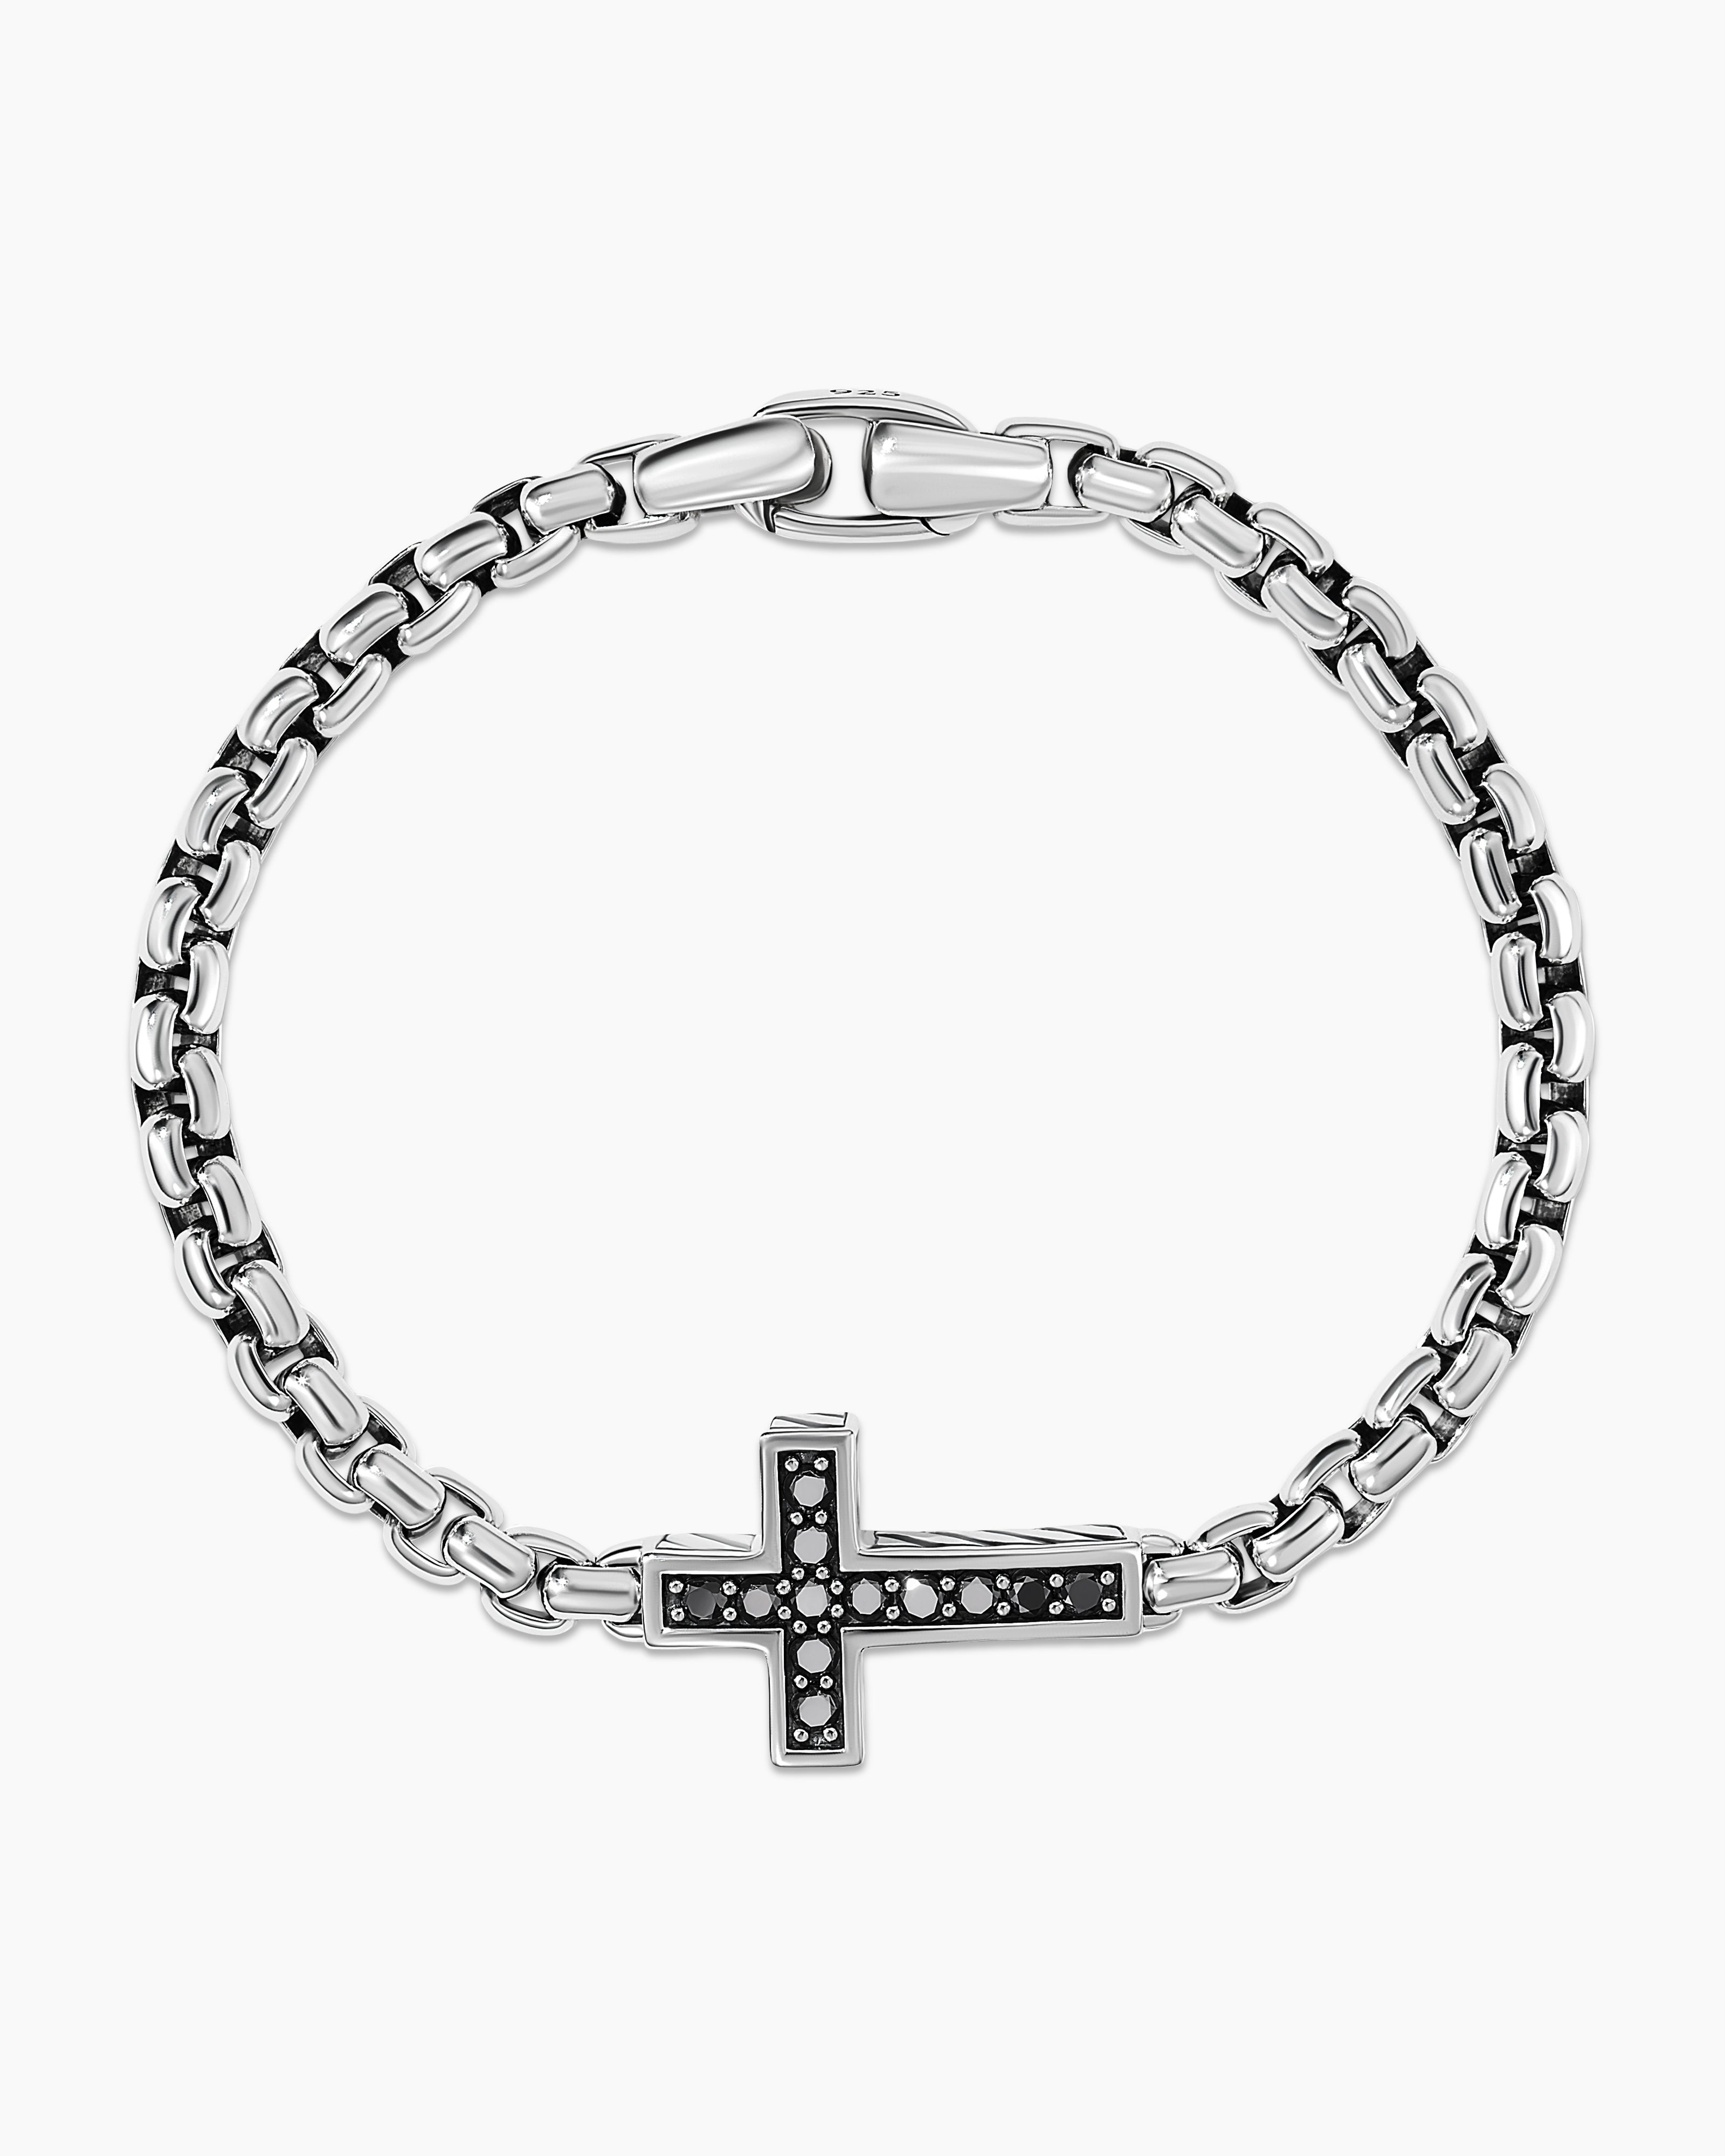 Amazon.com: Silver links chain bracelet for men,men's bracelet, flat chain,  groomsmen gift, gift for him, mens jewelry, gift for boyfriend, silver :  Handmade Products